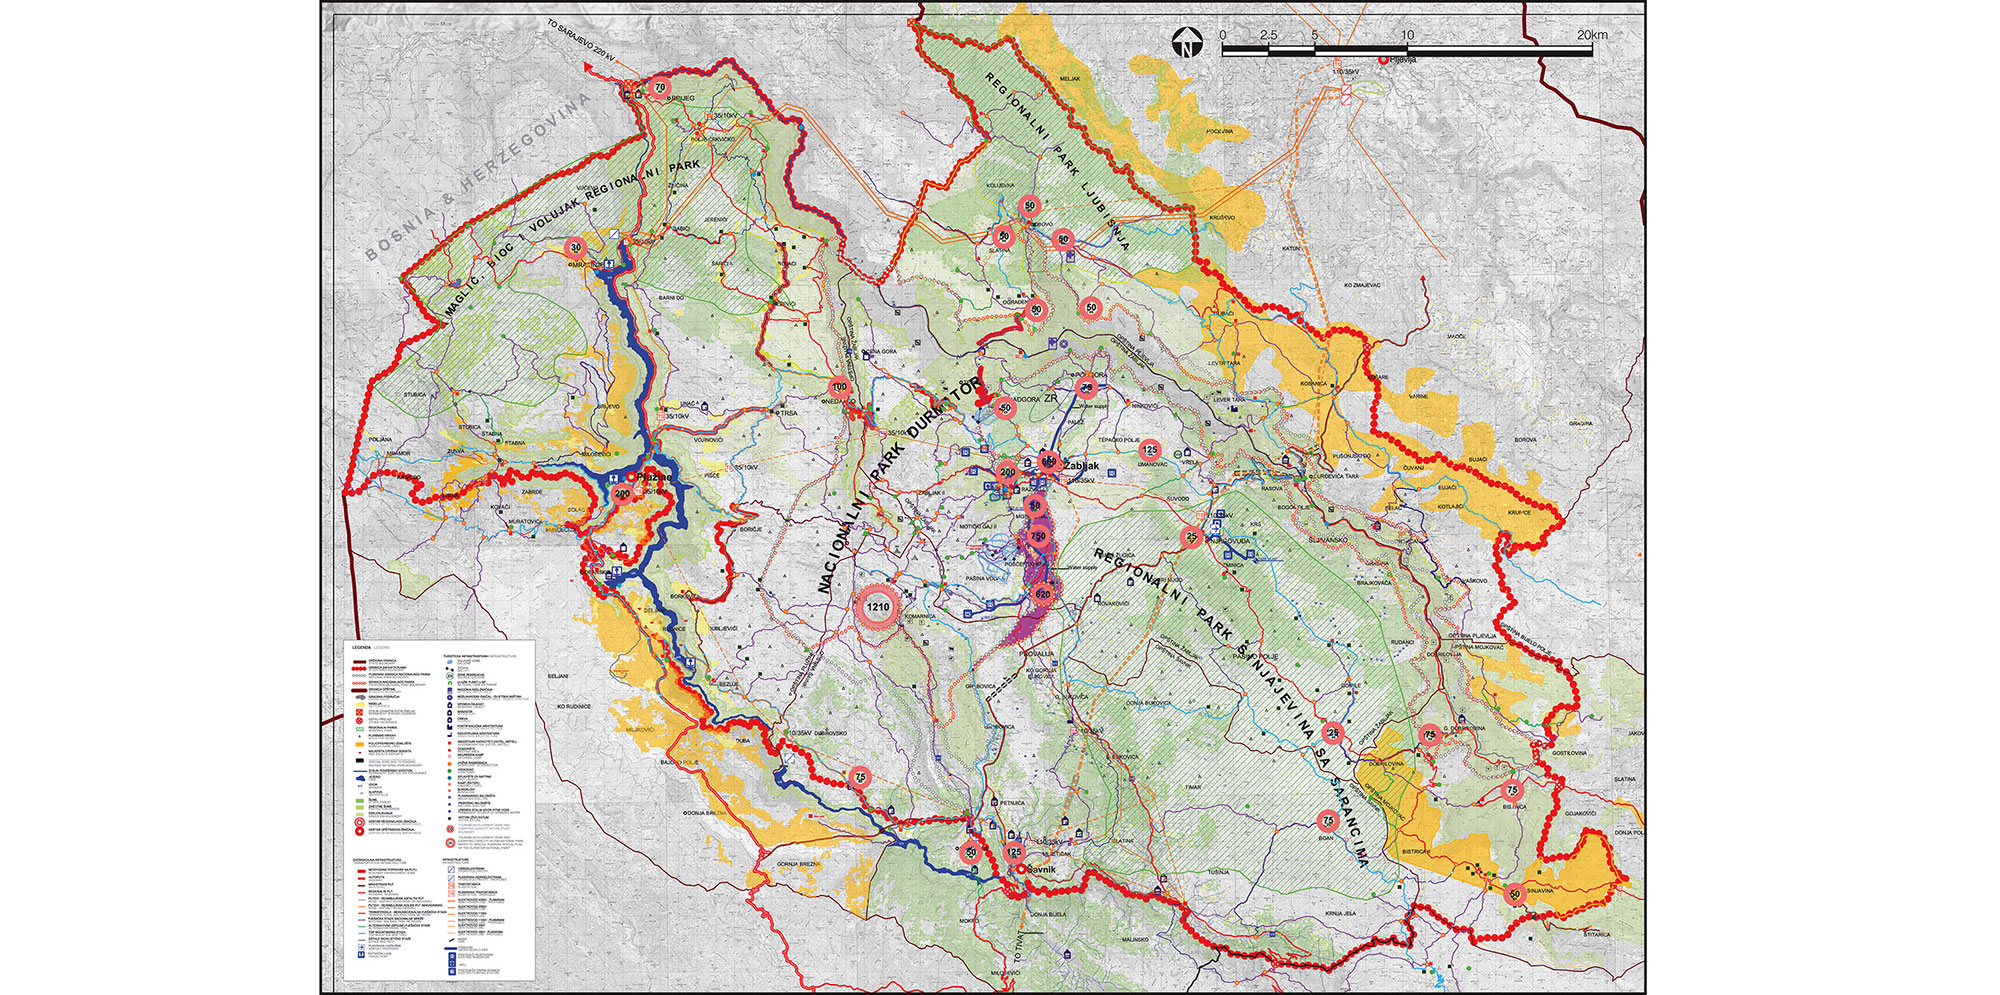 Mt Durmitor regional map. For full text, download project PDF below.